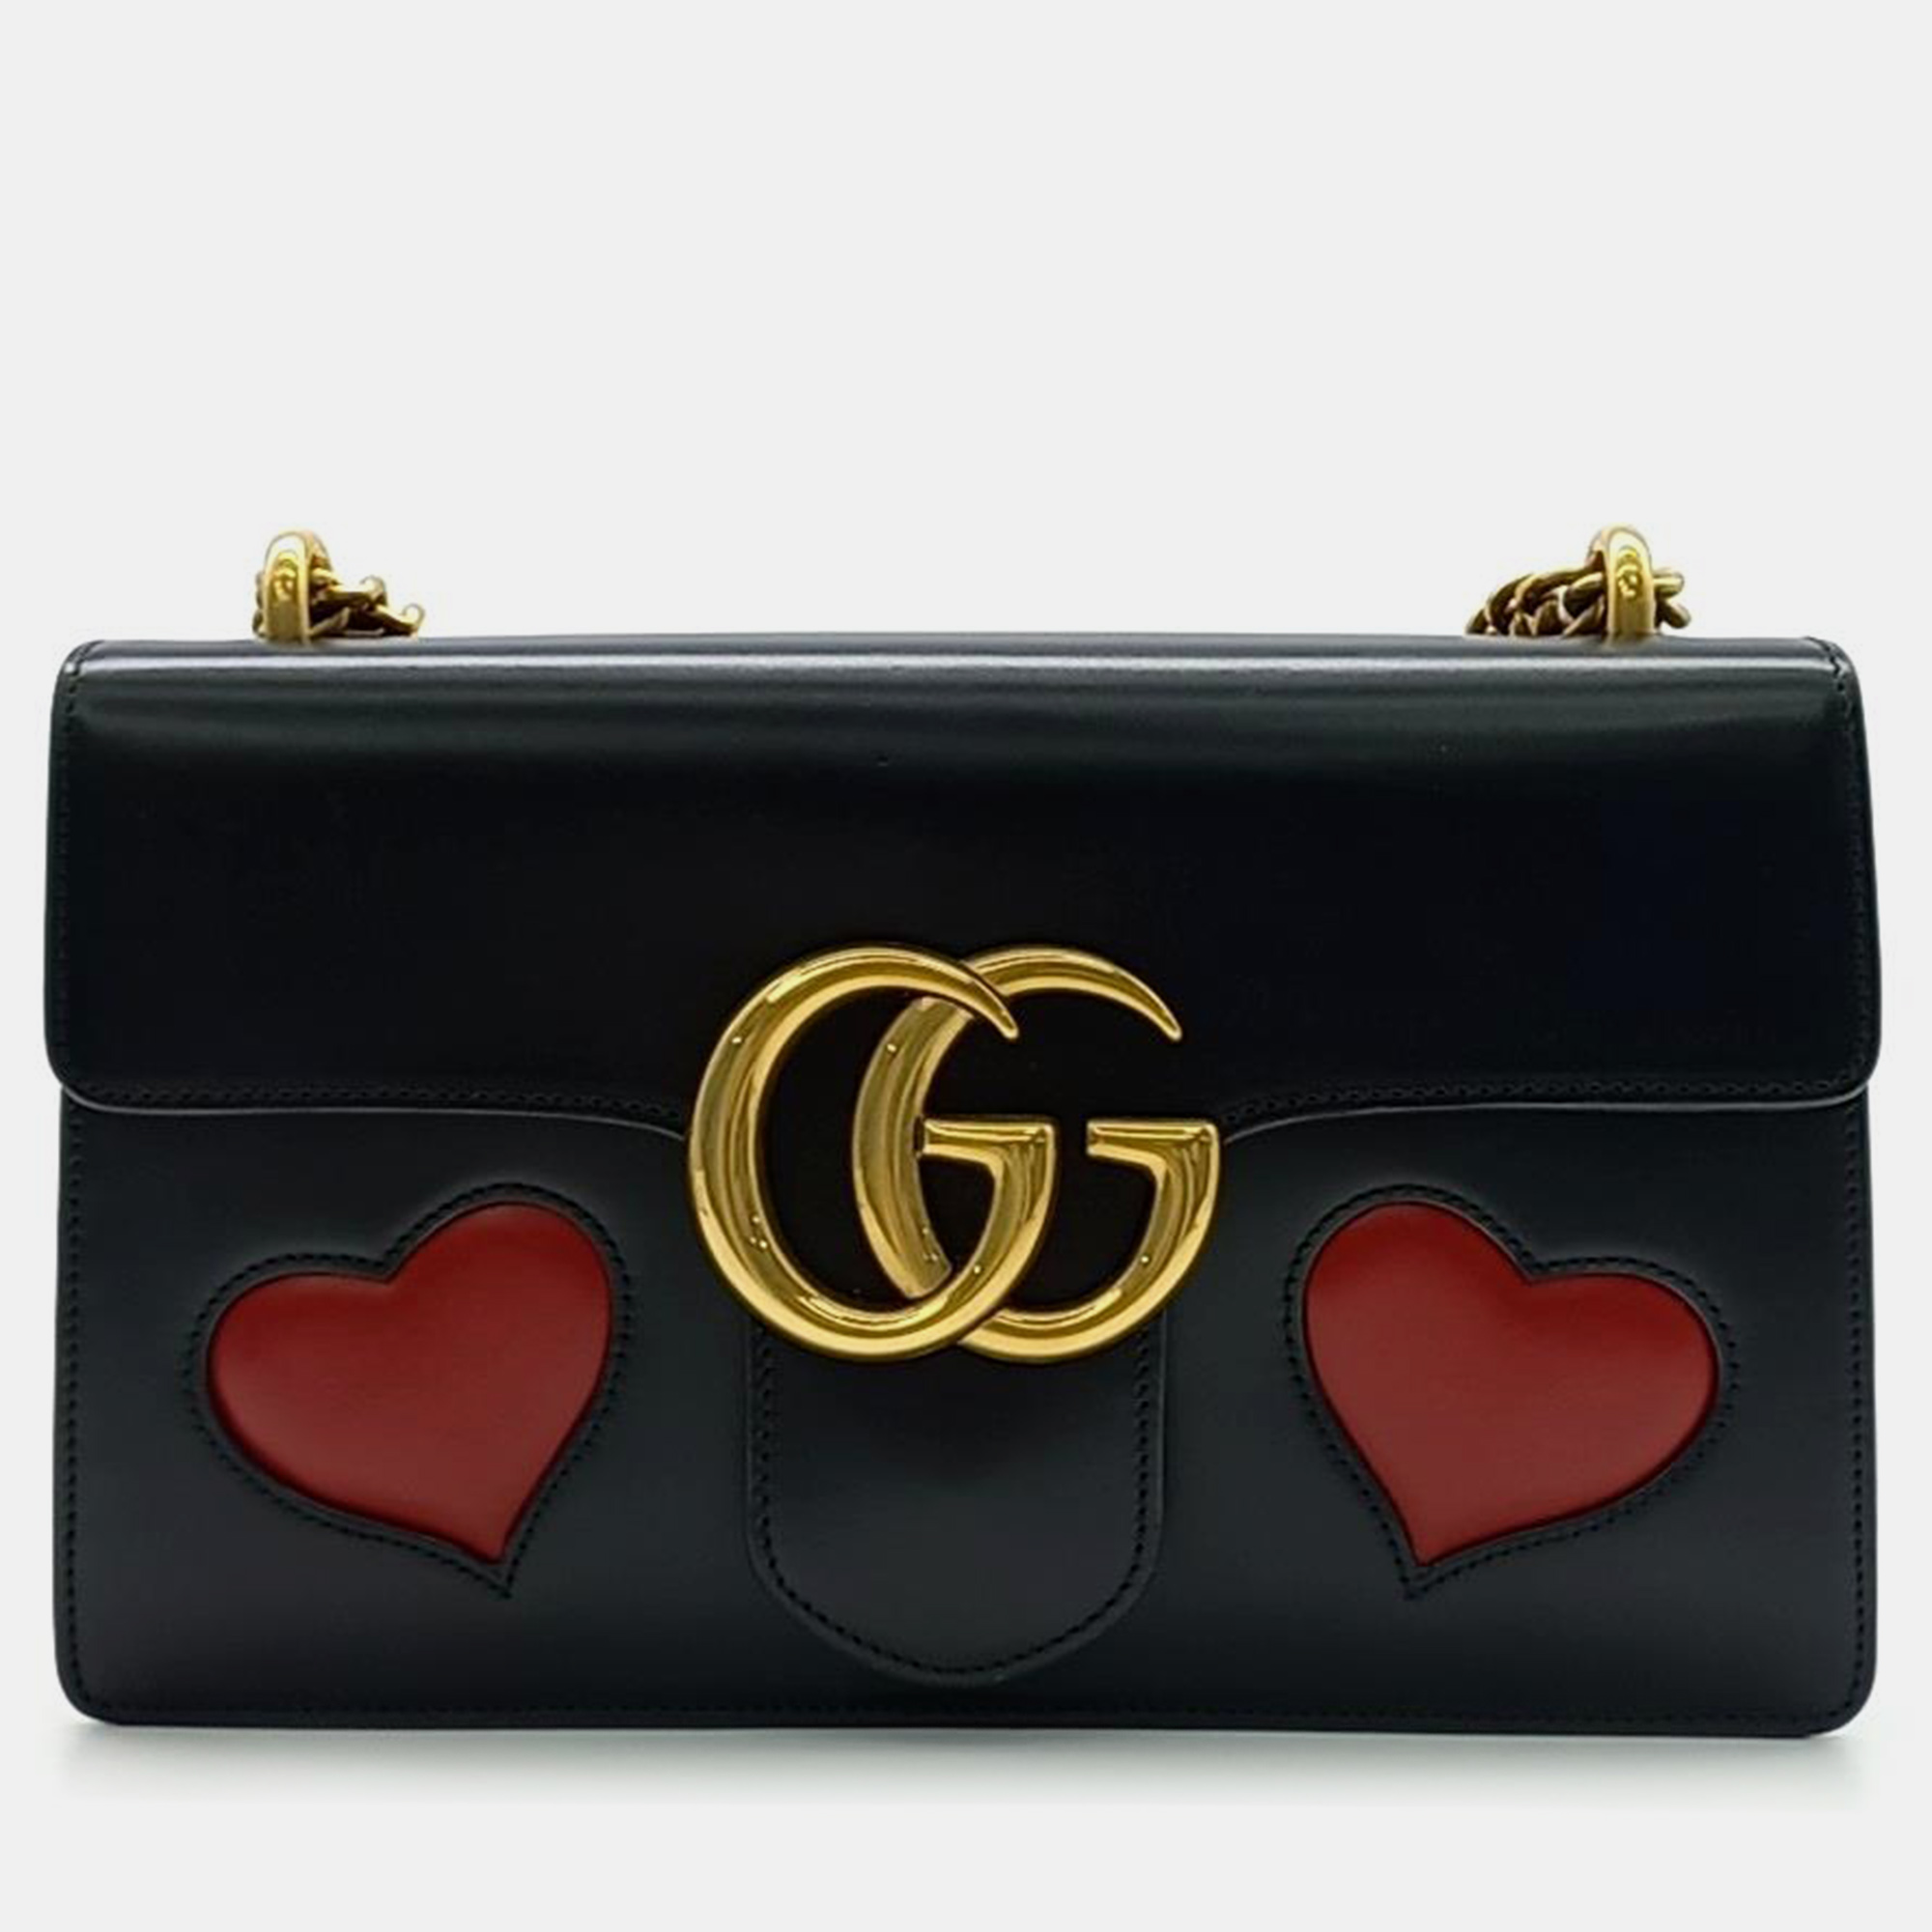 Gucci black leather medium heart gg marmont shoulder bag